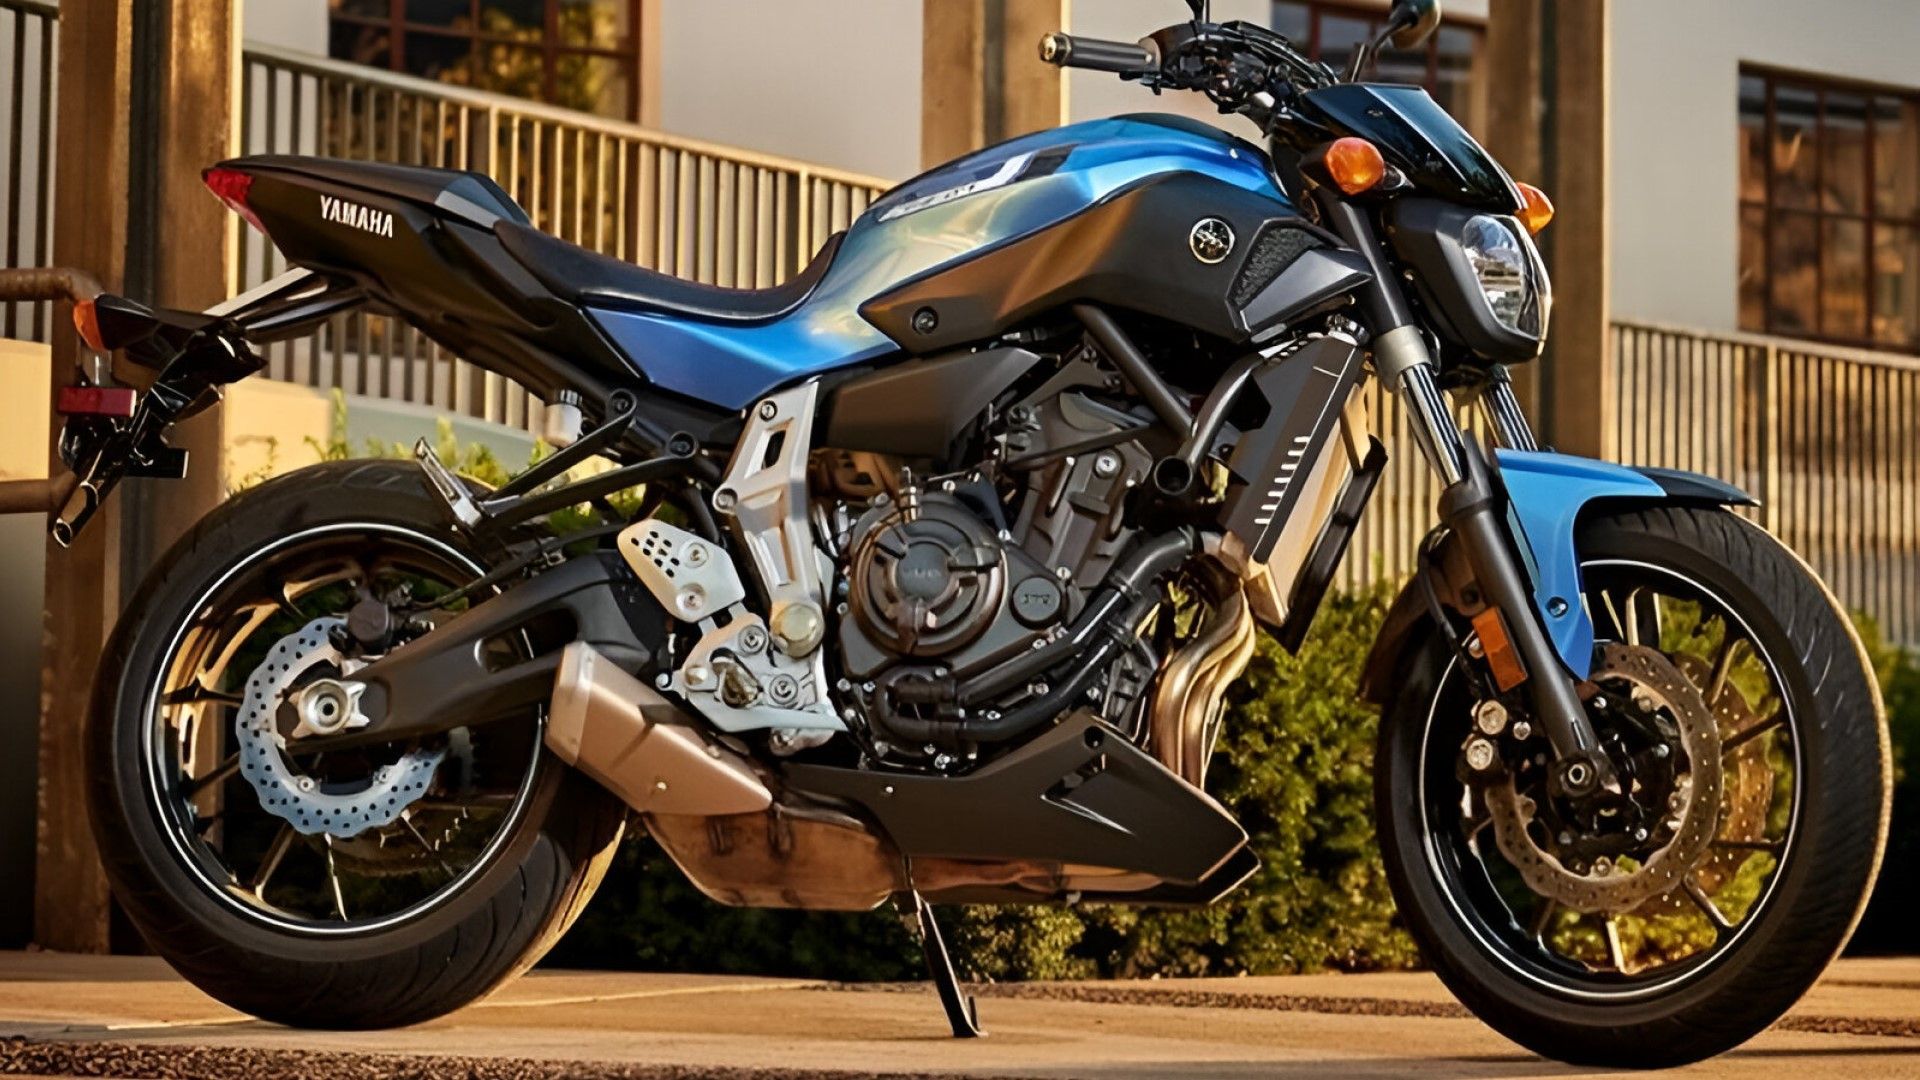 2017 Yamaha FZ-09 side profile view